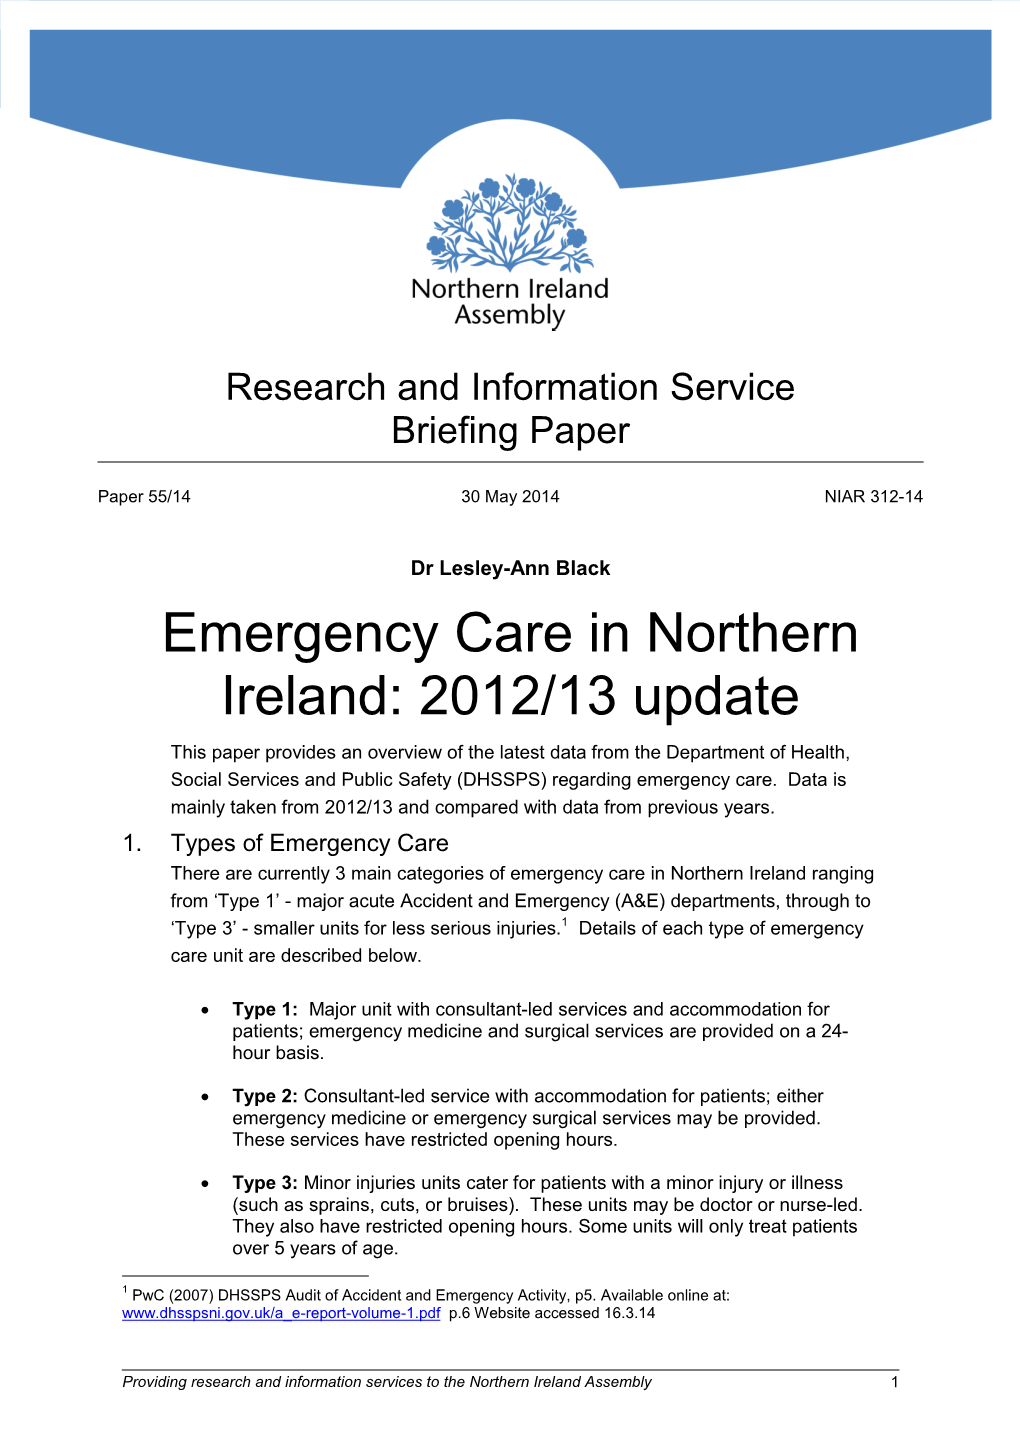 Emergency Care in Northern Ireland: 2012/13 Update